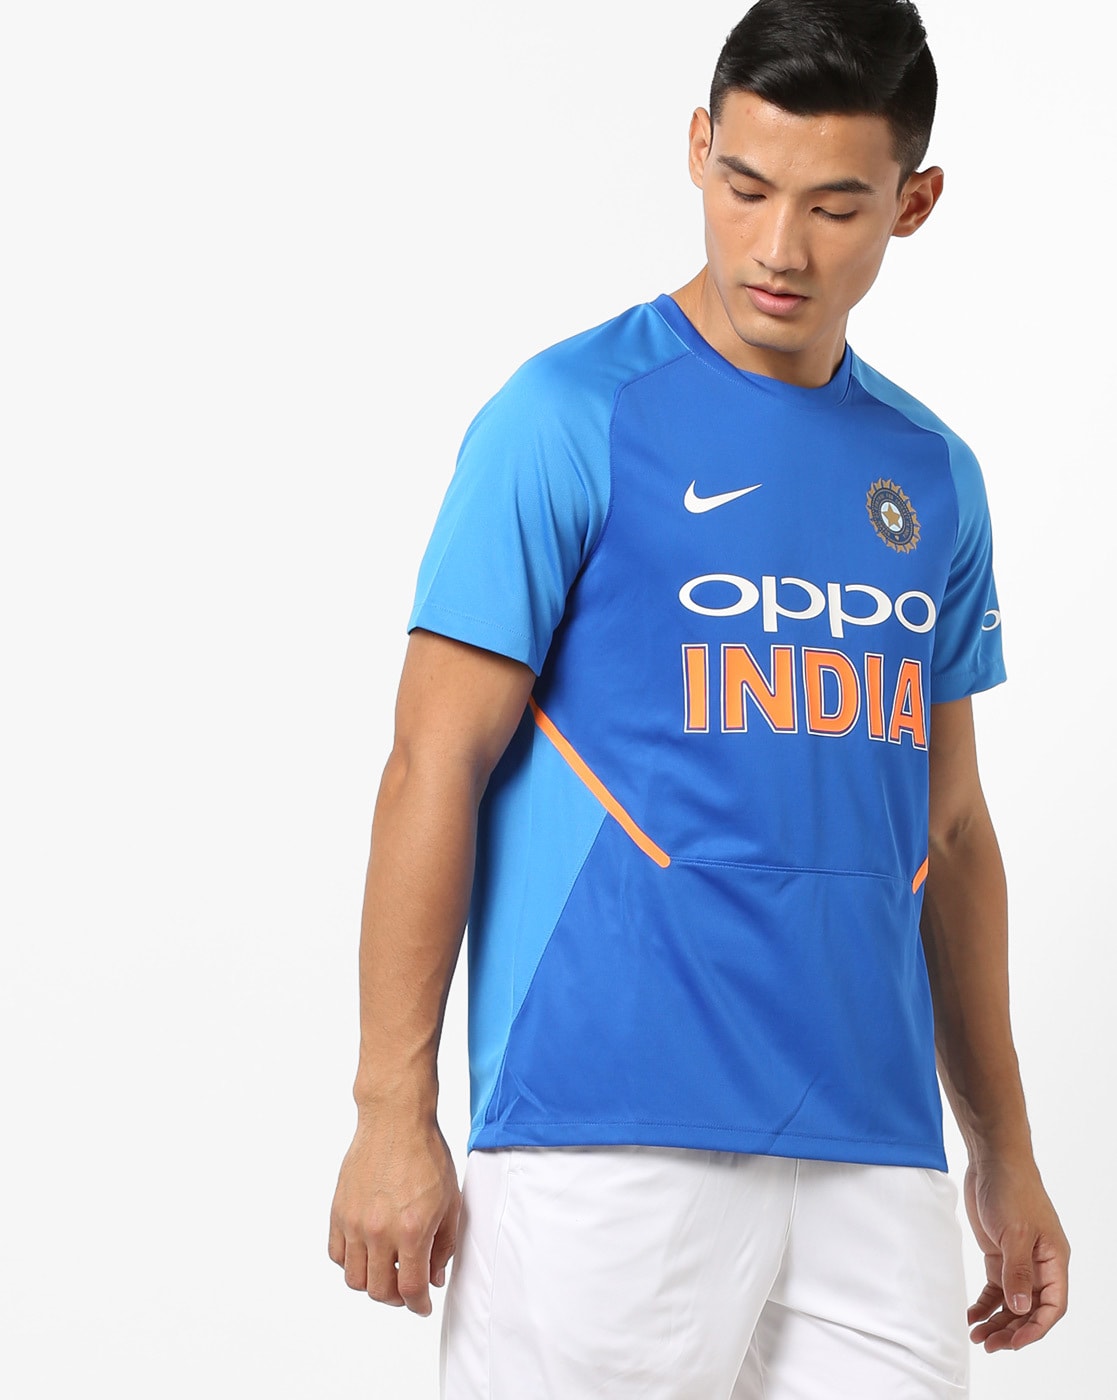 cricket jersey online purchase